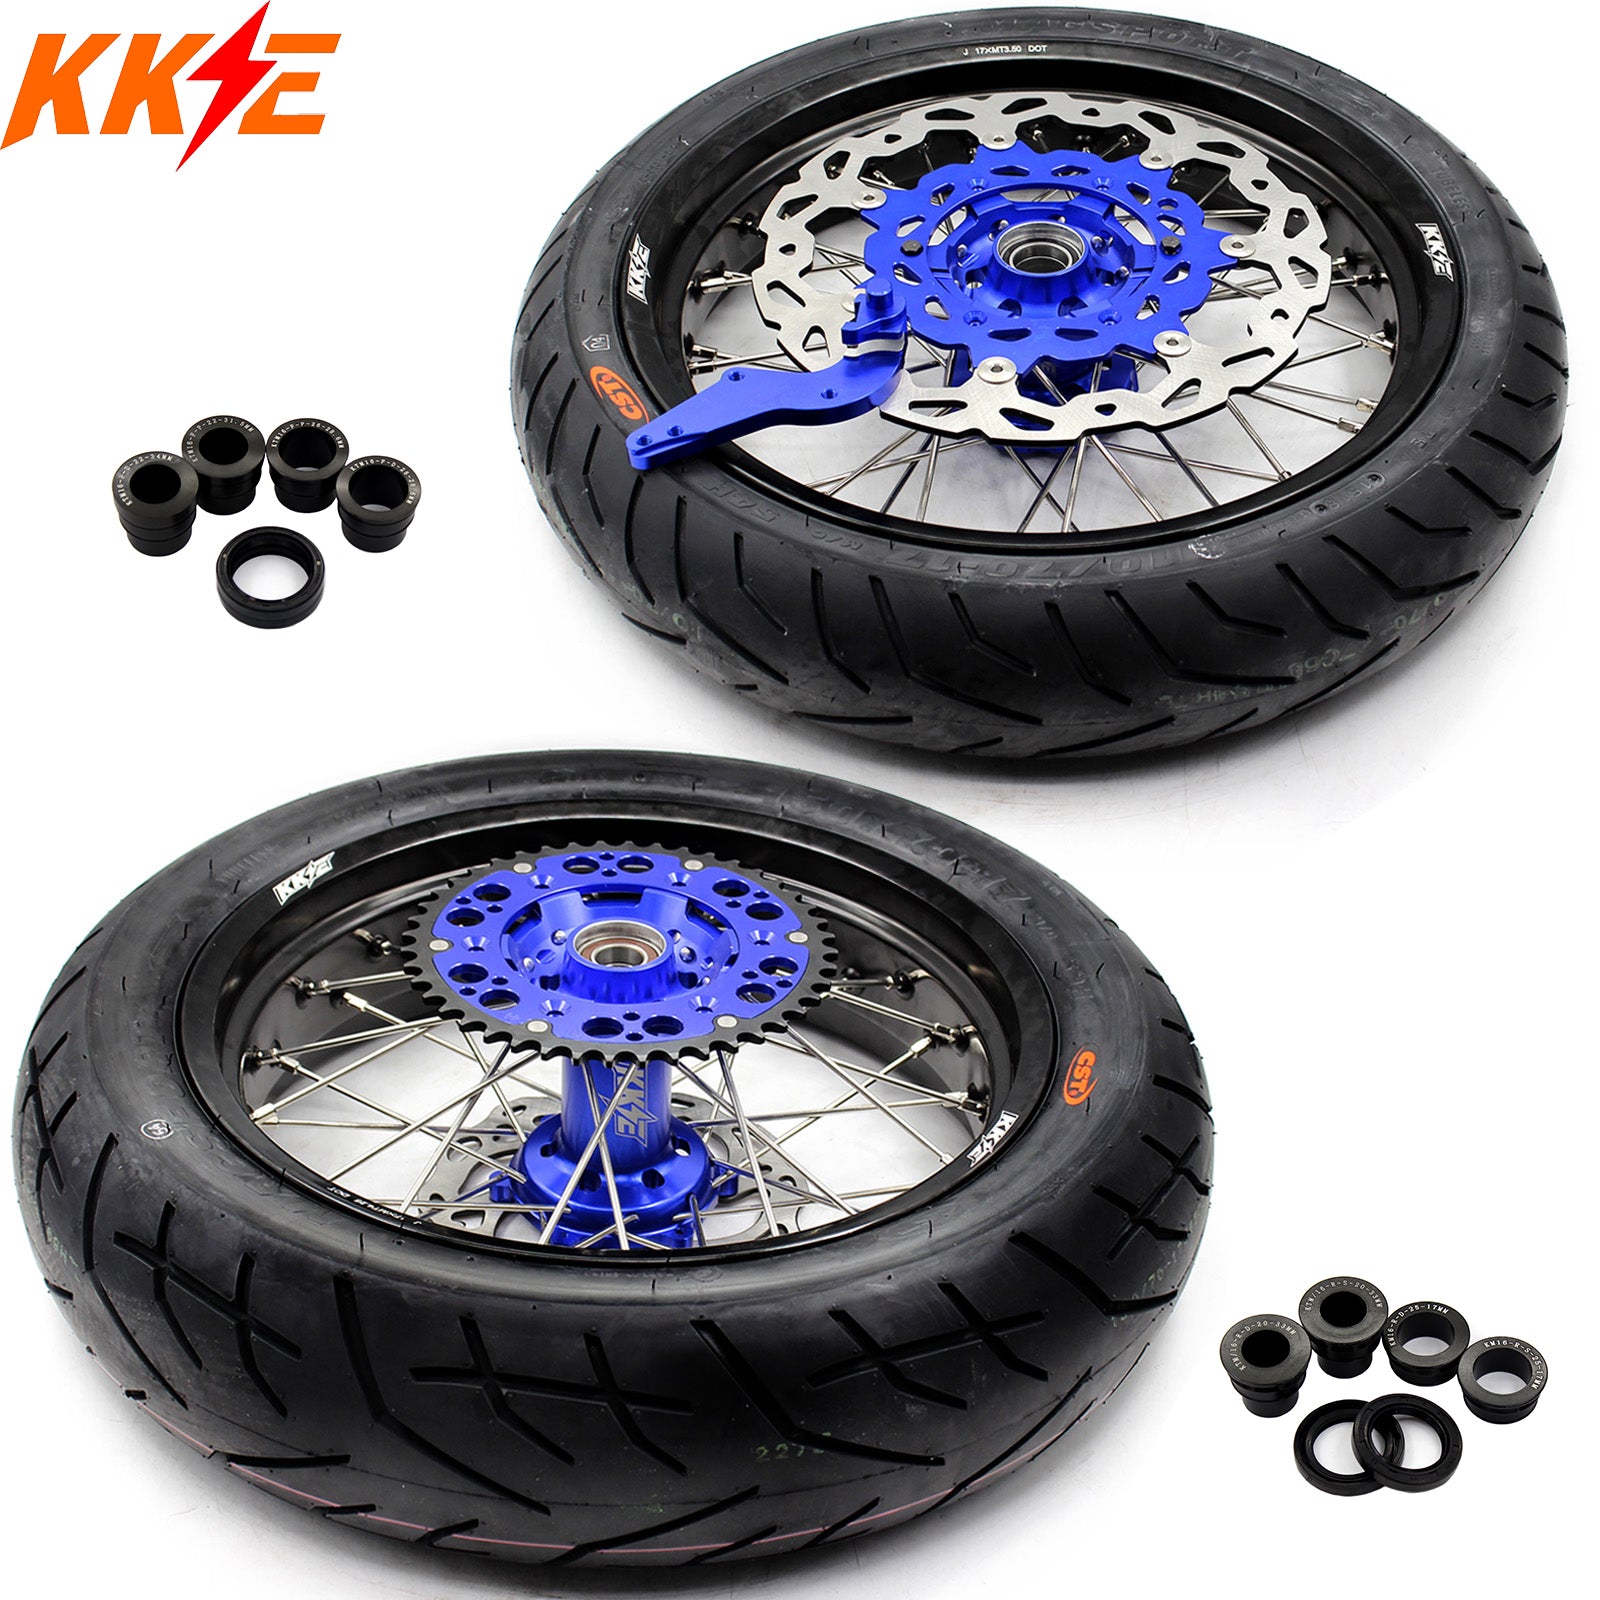 Supermoto Wheels – KKE Racing